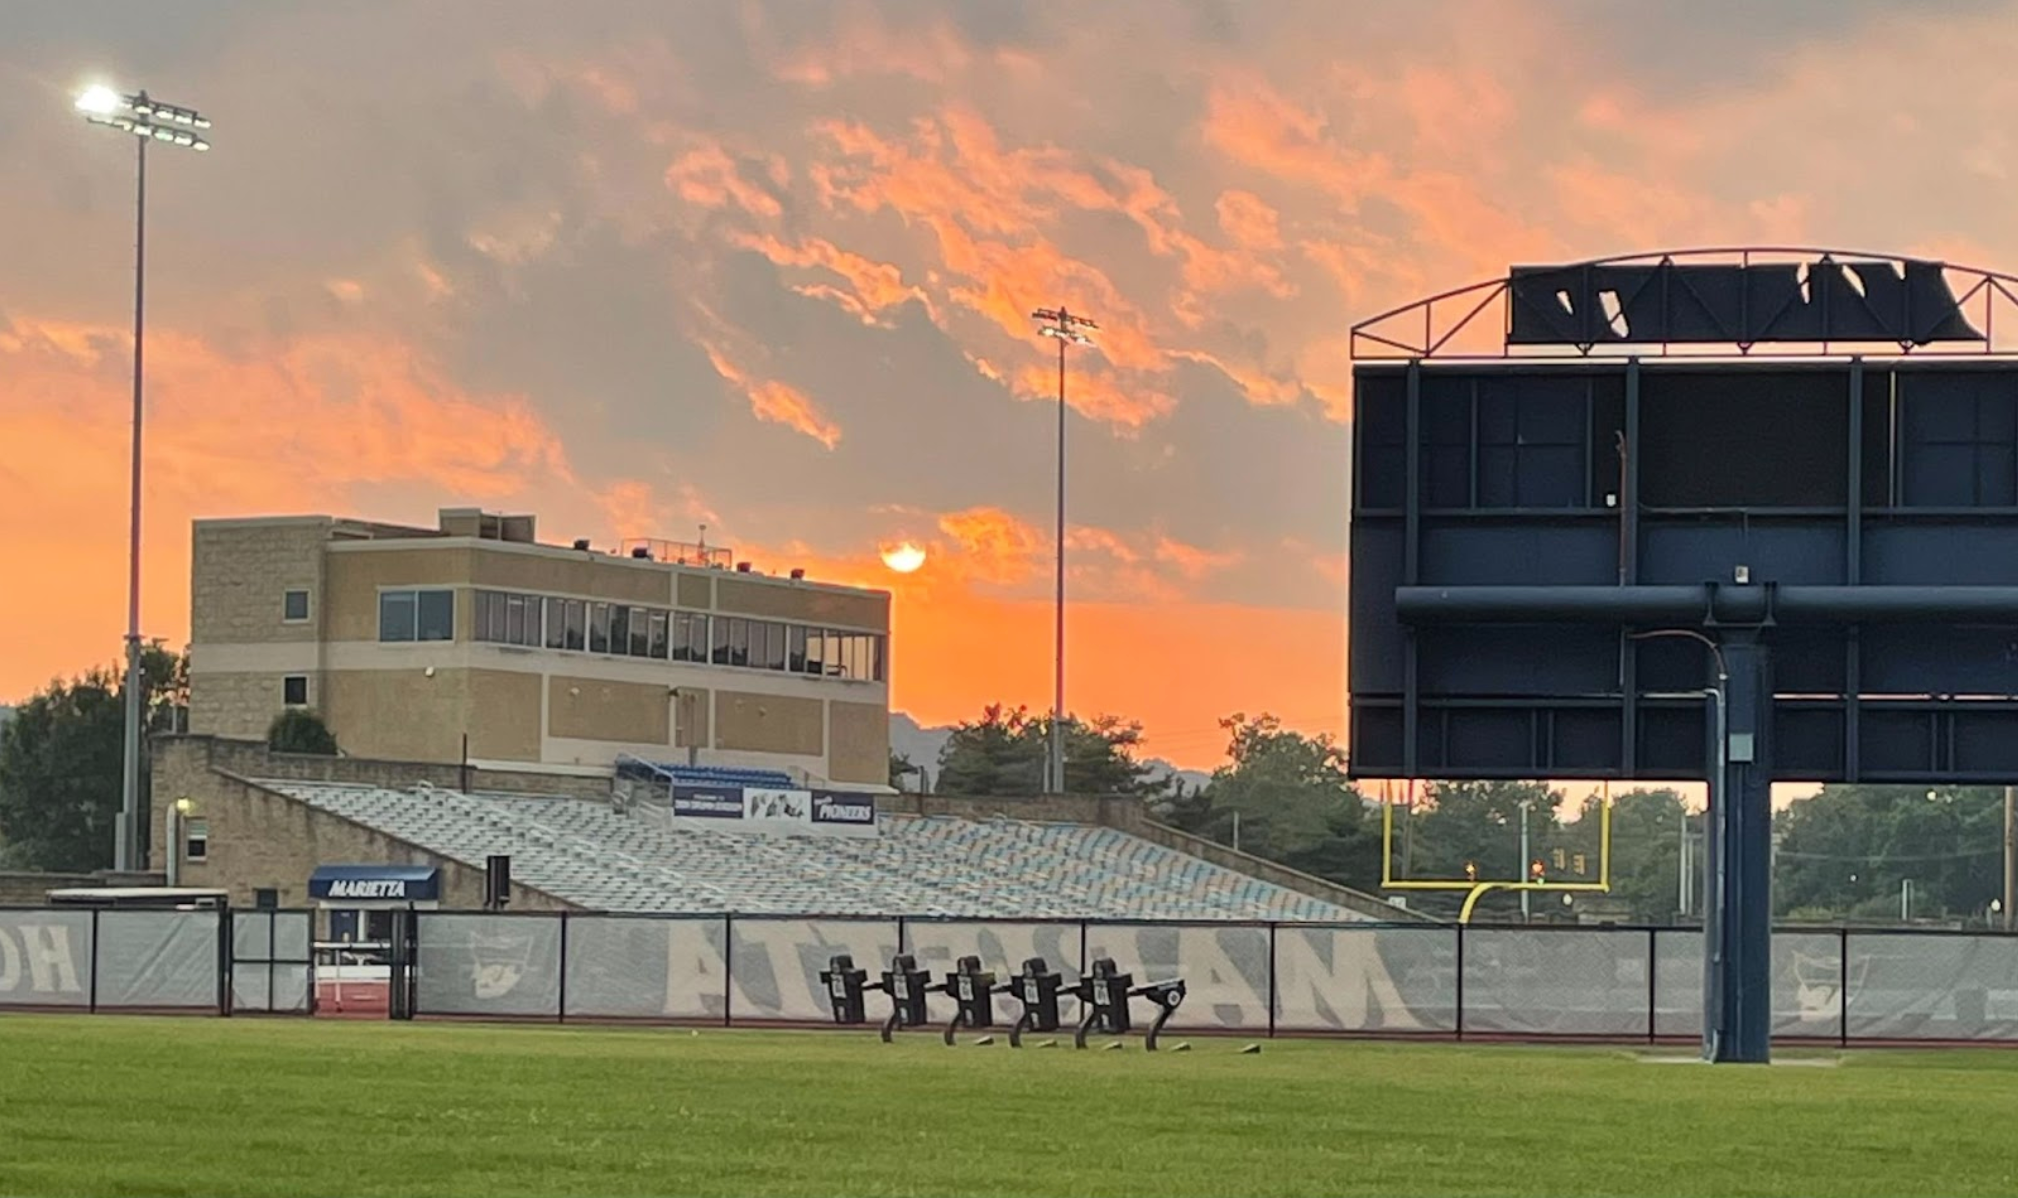 Football field at sunset.